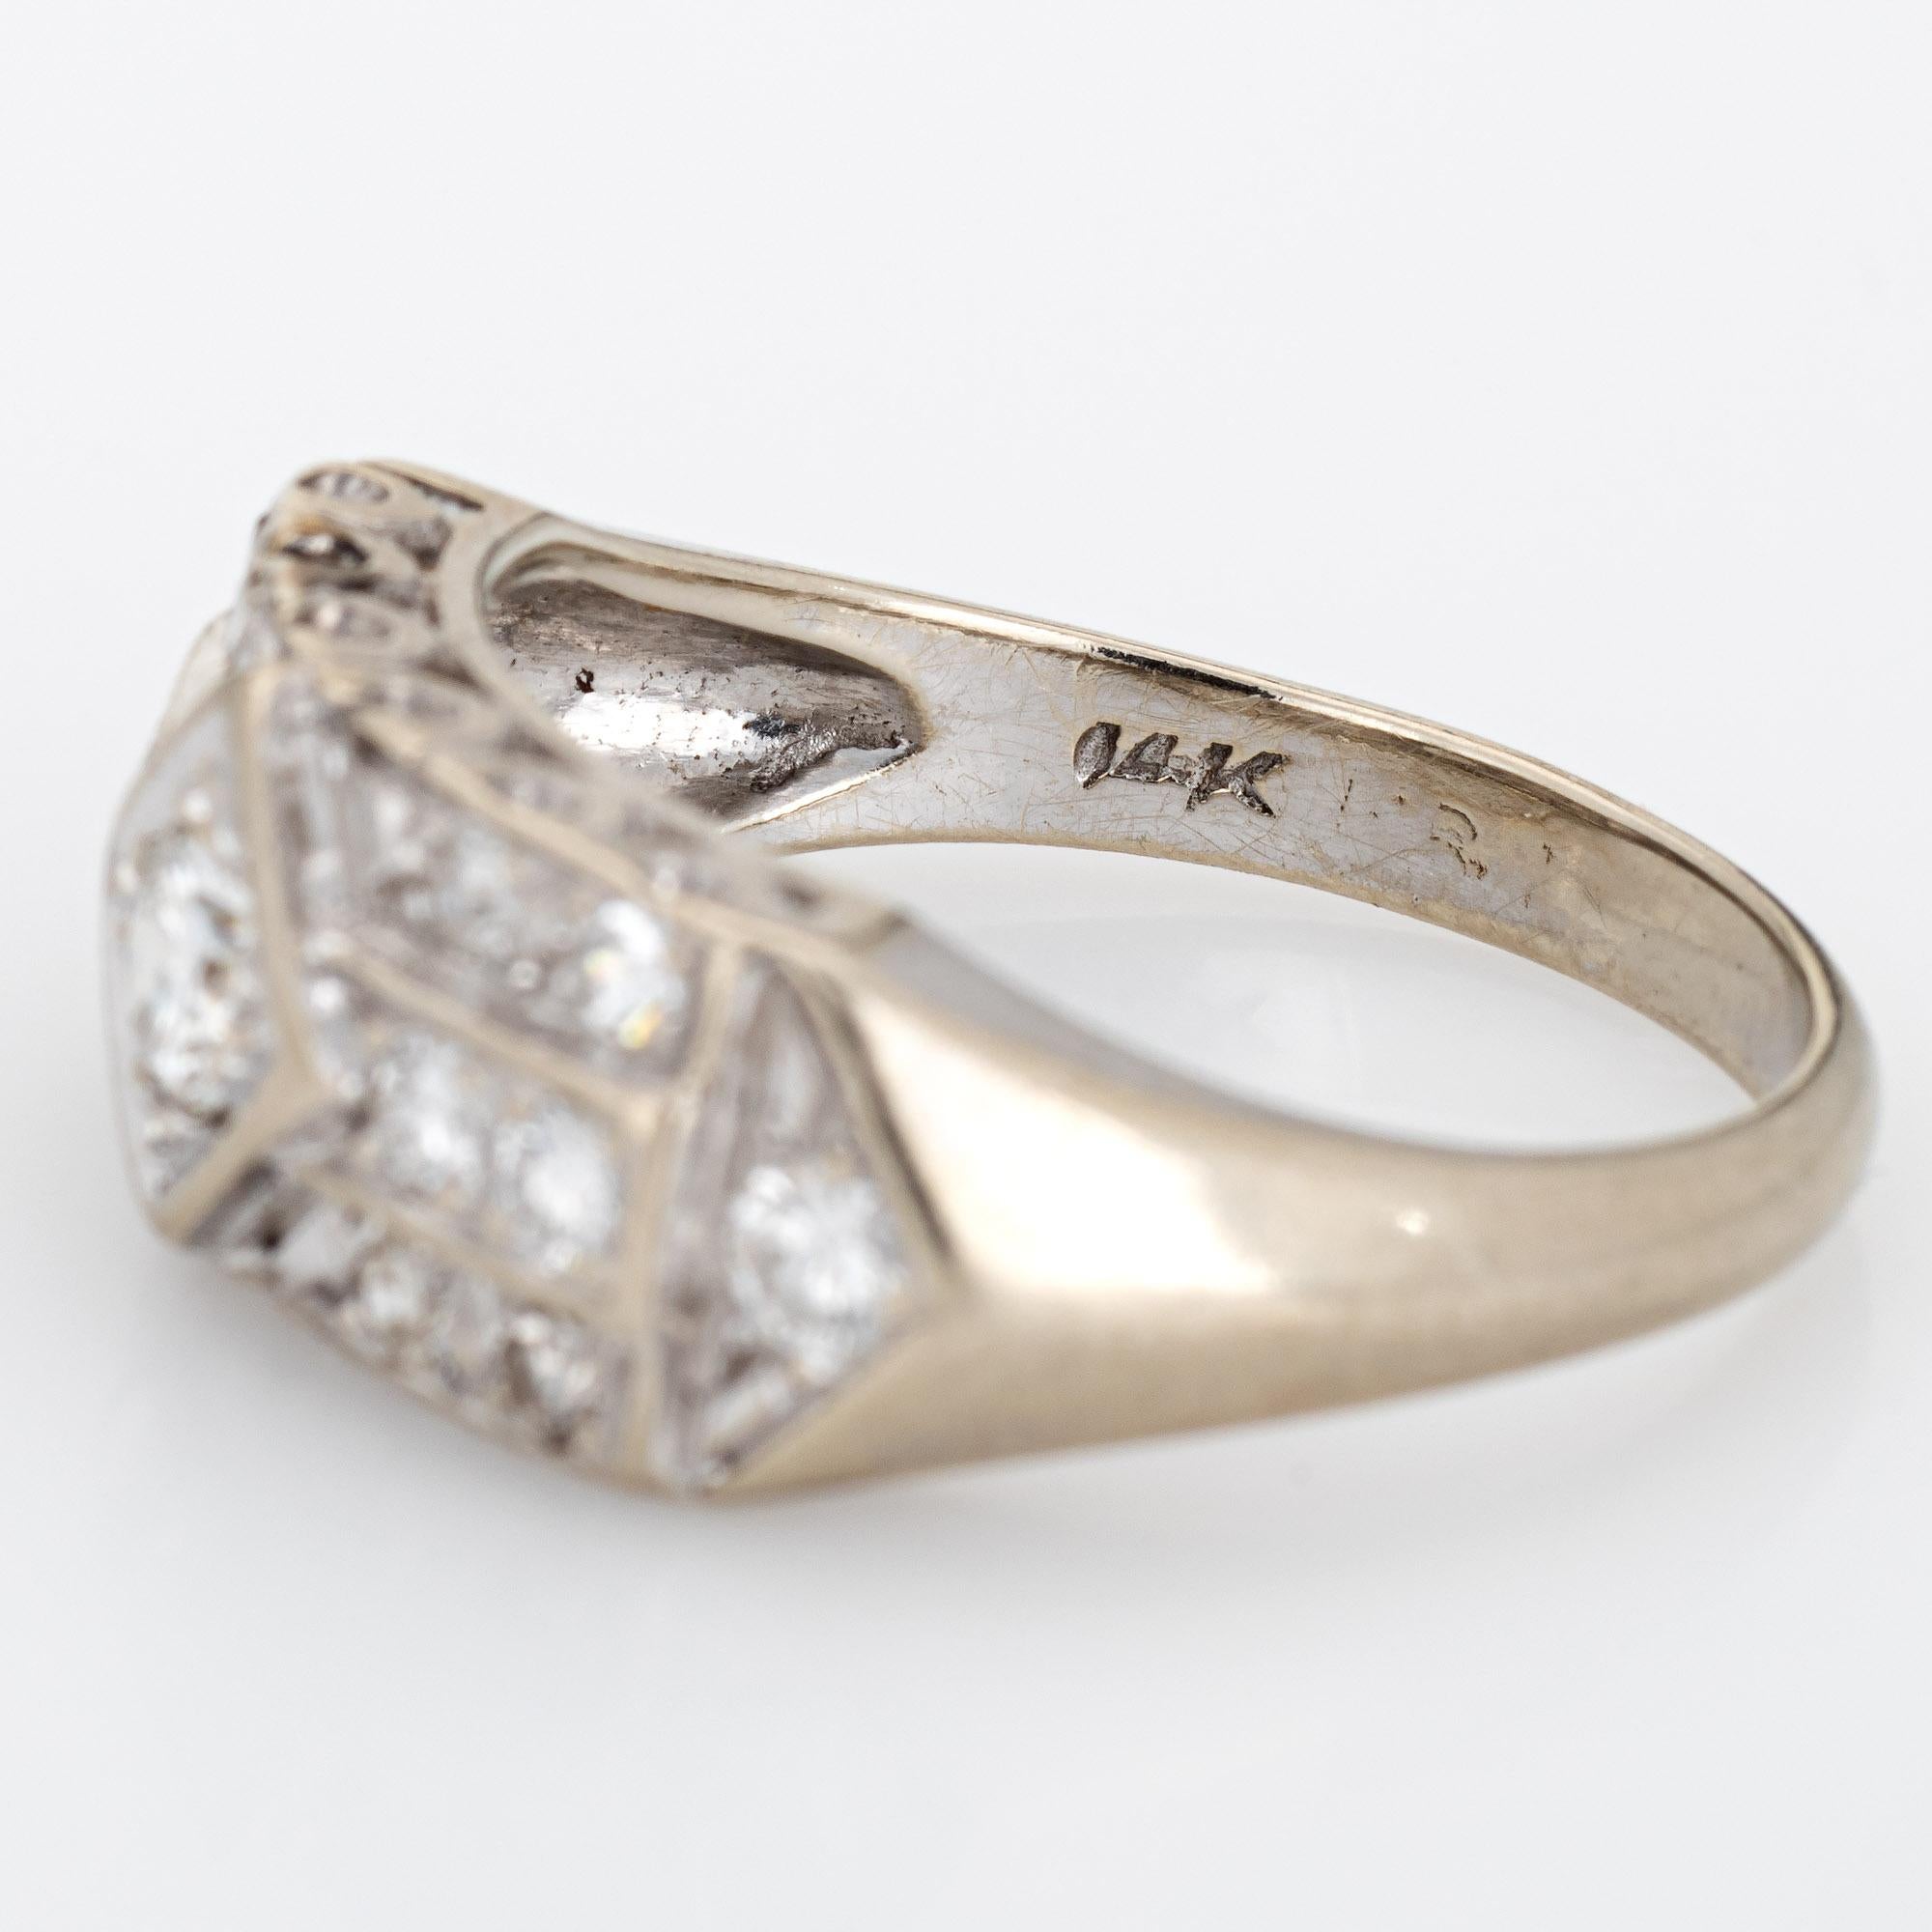 Vintage Art Deco Diamond Ring 14k White Gold Band Estate Fine Jewelry Sz 5.75 2